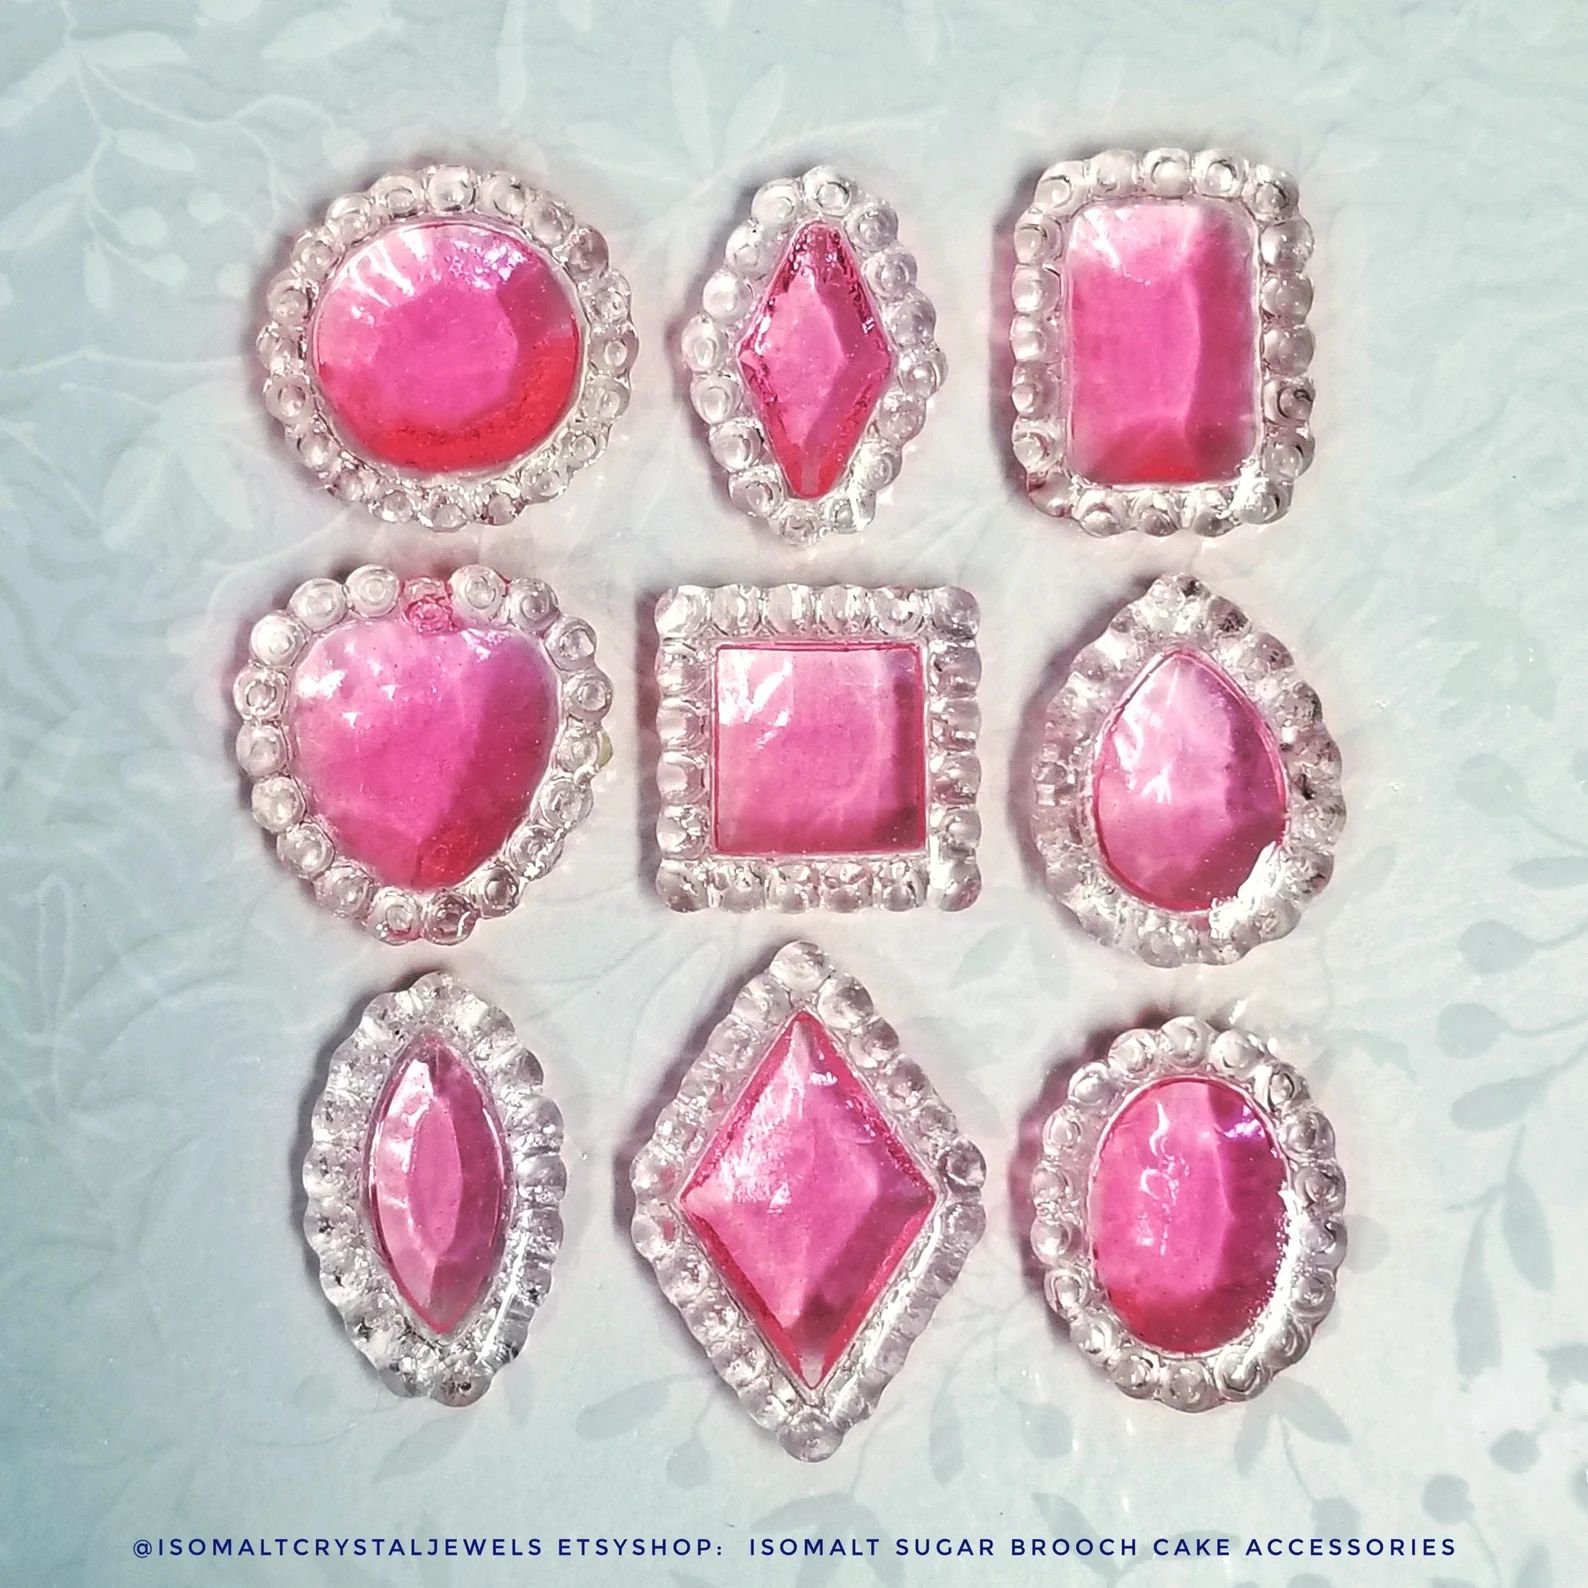 9 Edible Sugar Brooches Edible Gemstones Cake Jewels - Etsy | Etsy (US)